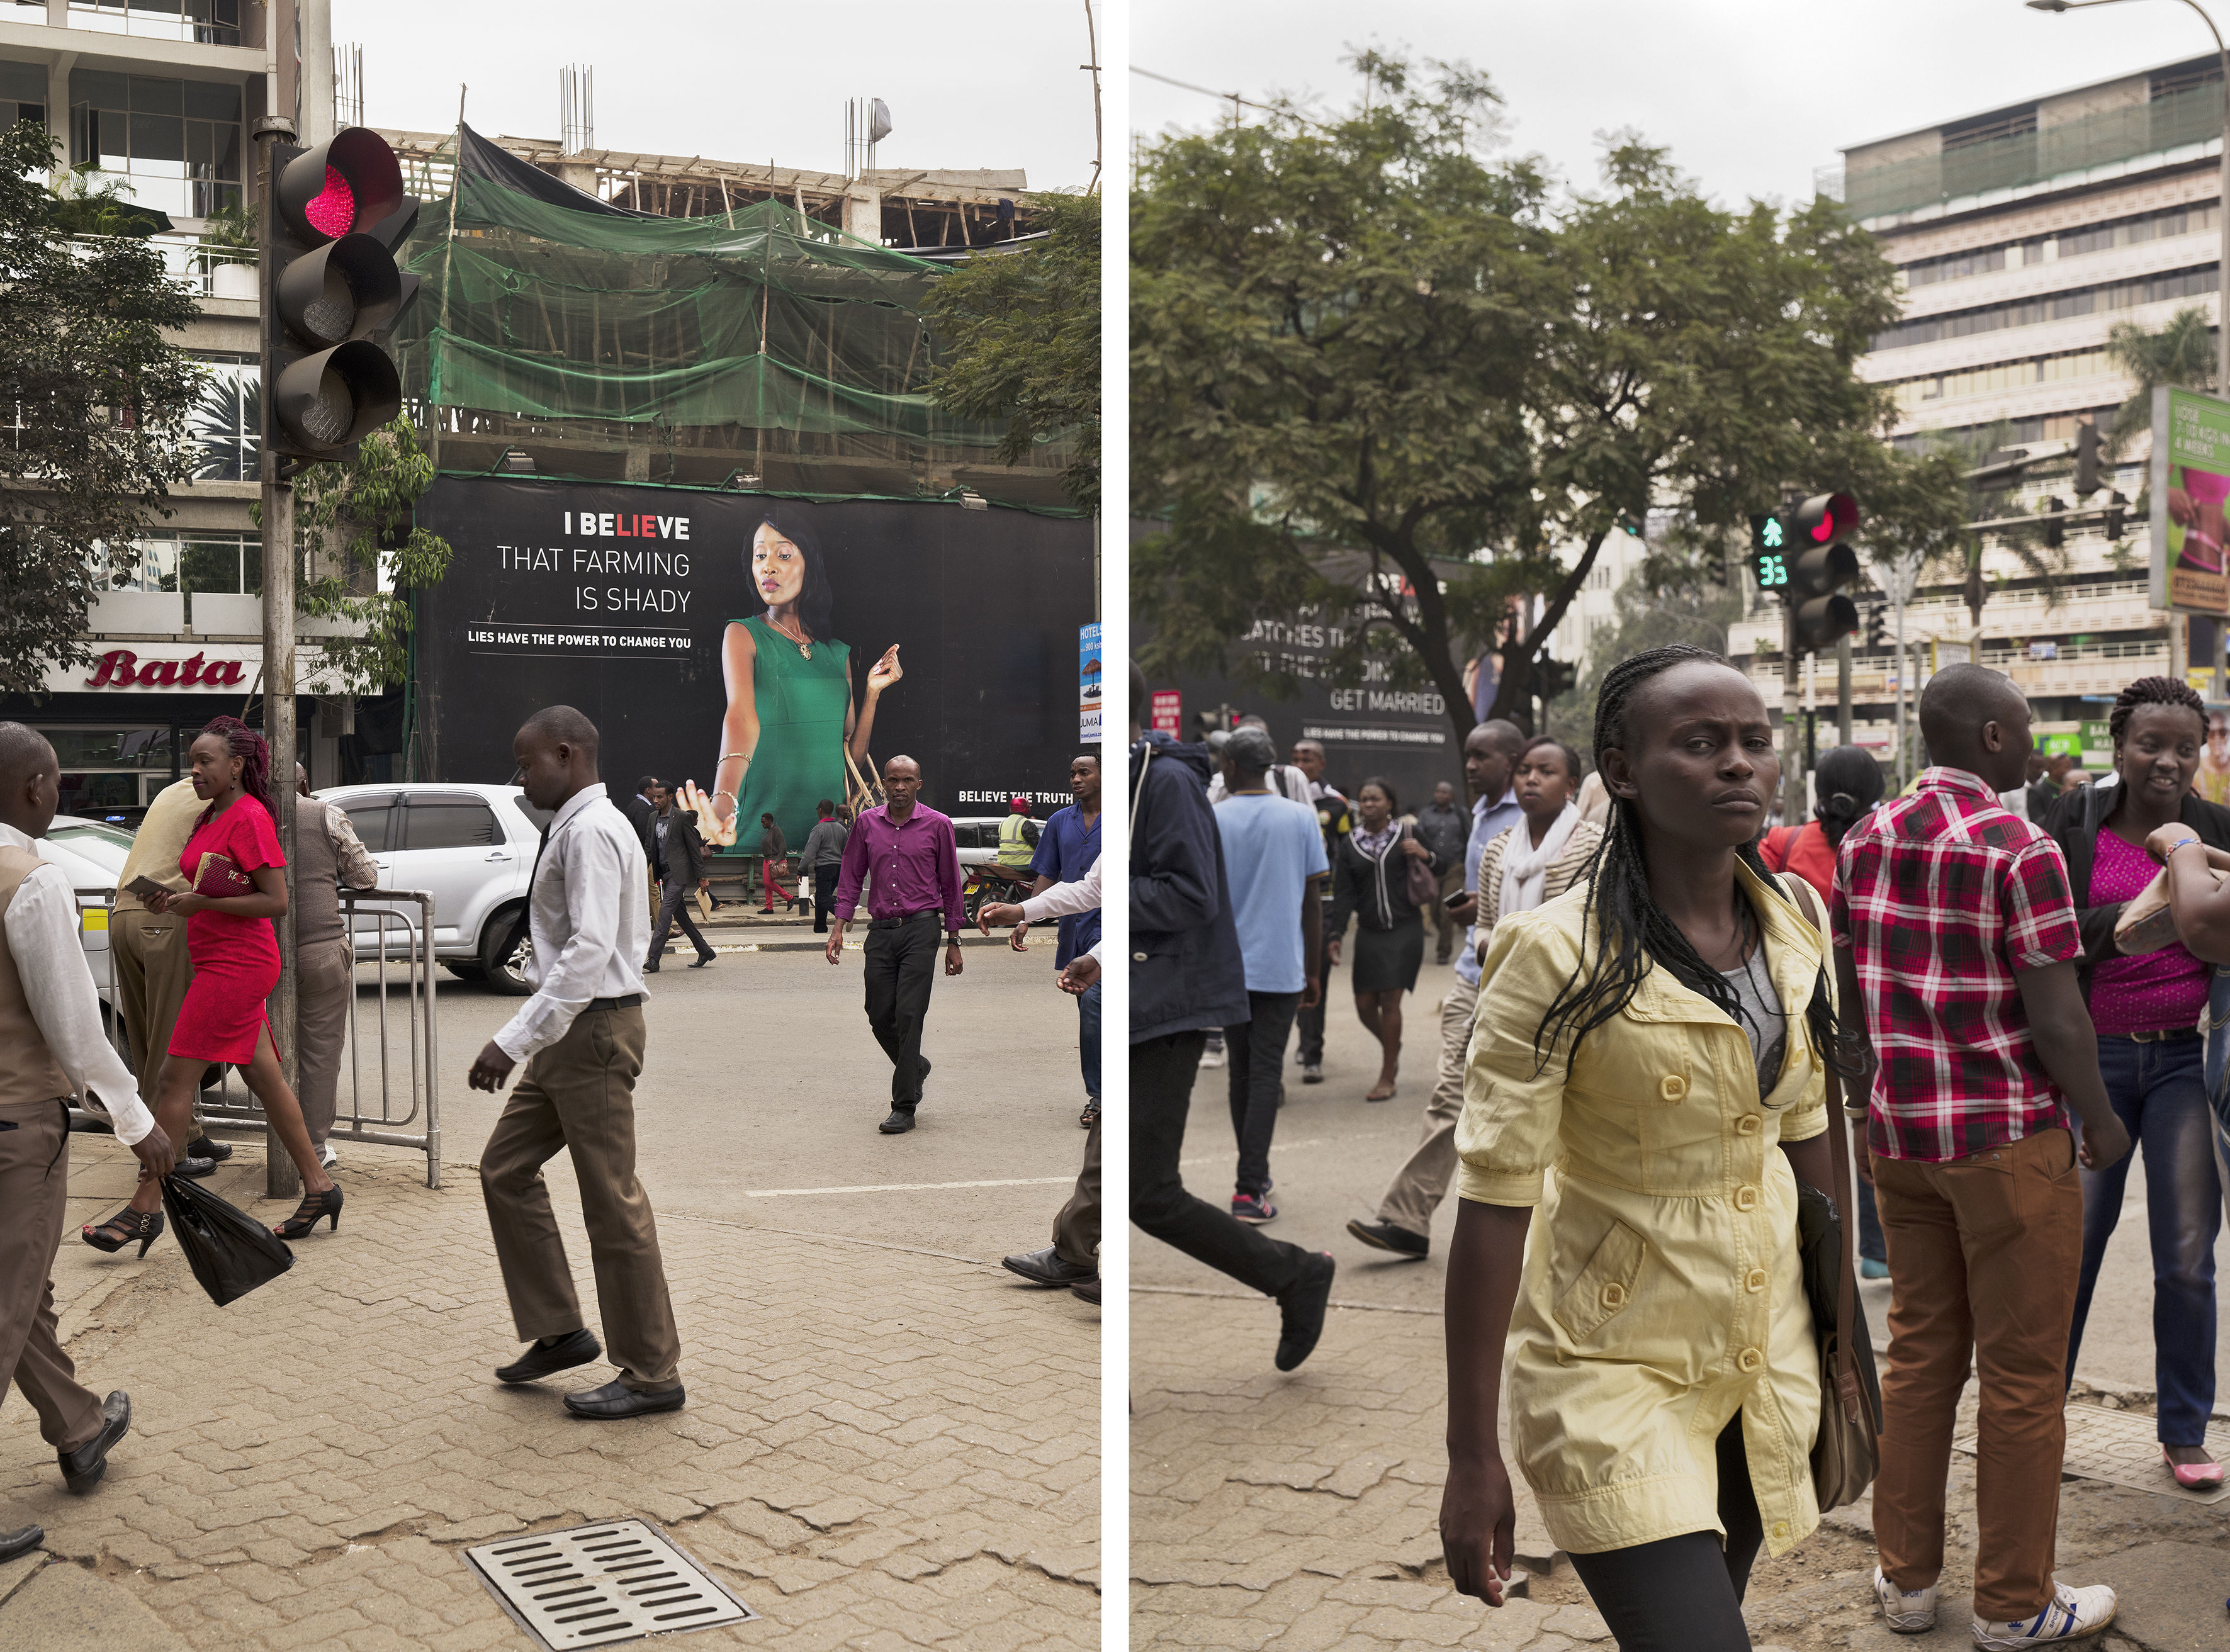  - Kenyatta Avenue, Nairobi, Kenya, 2016, 